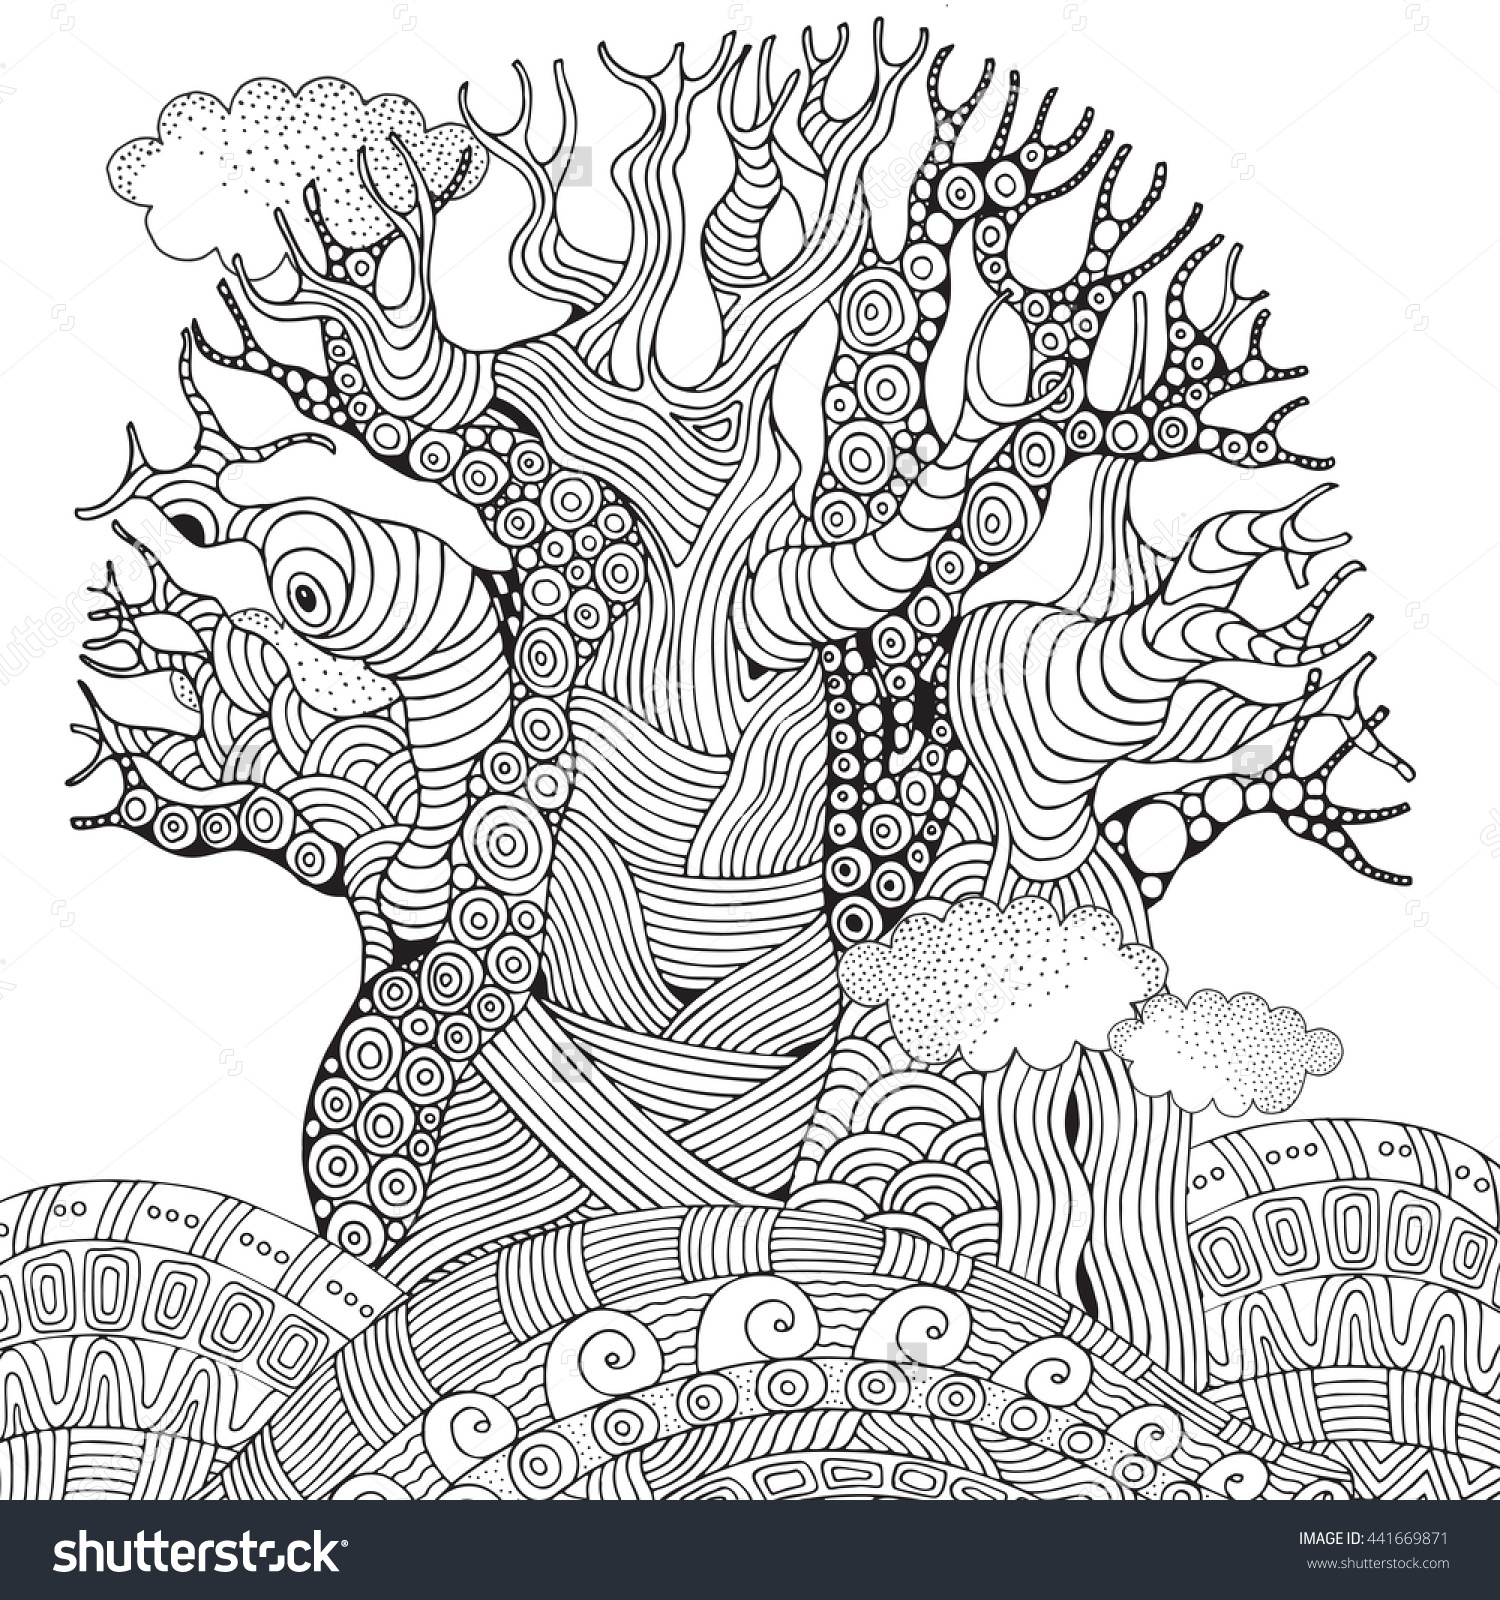 Baobab Tree coloring #11, Download drawings